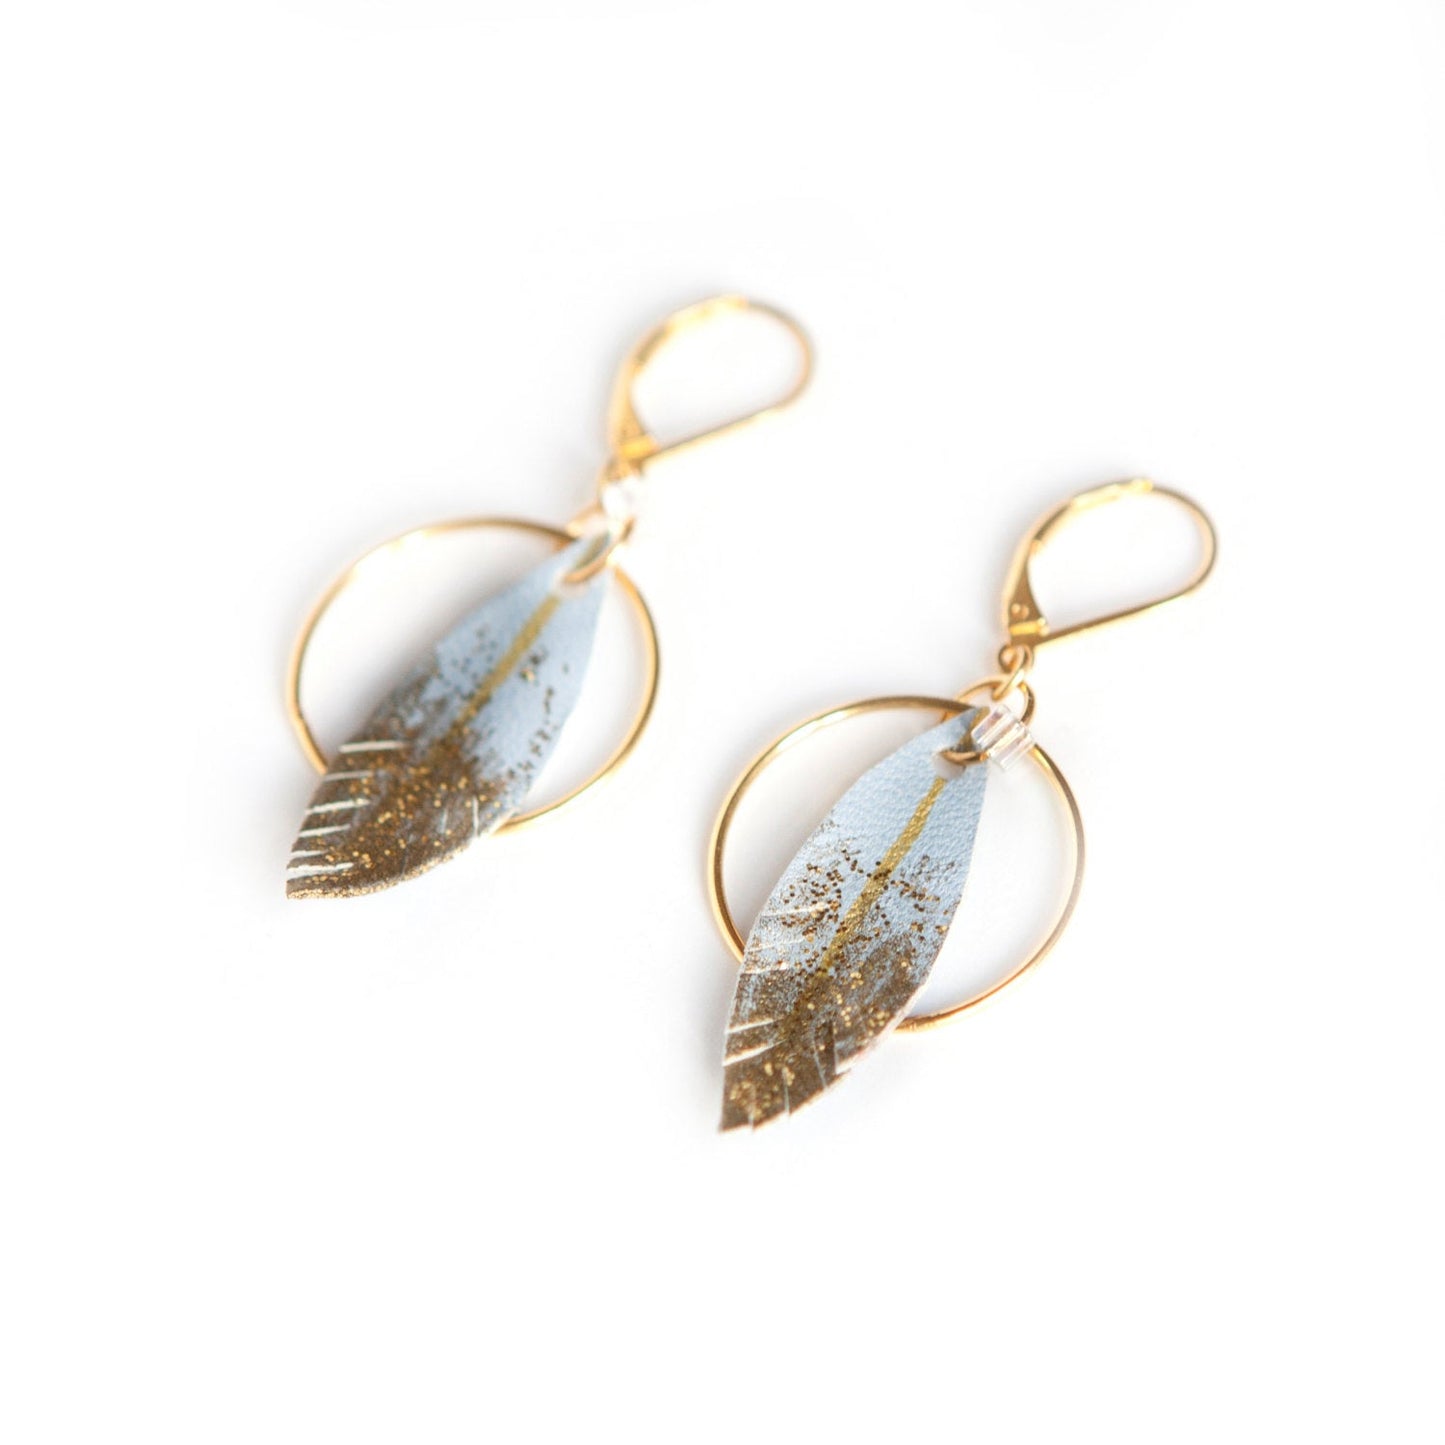 Pale blue leather feather hoop earrings